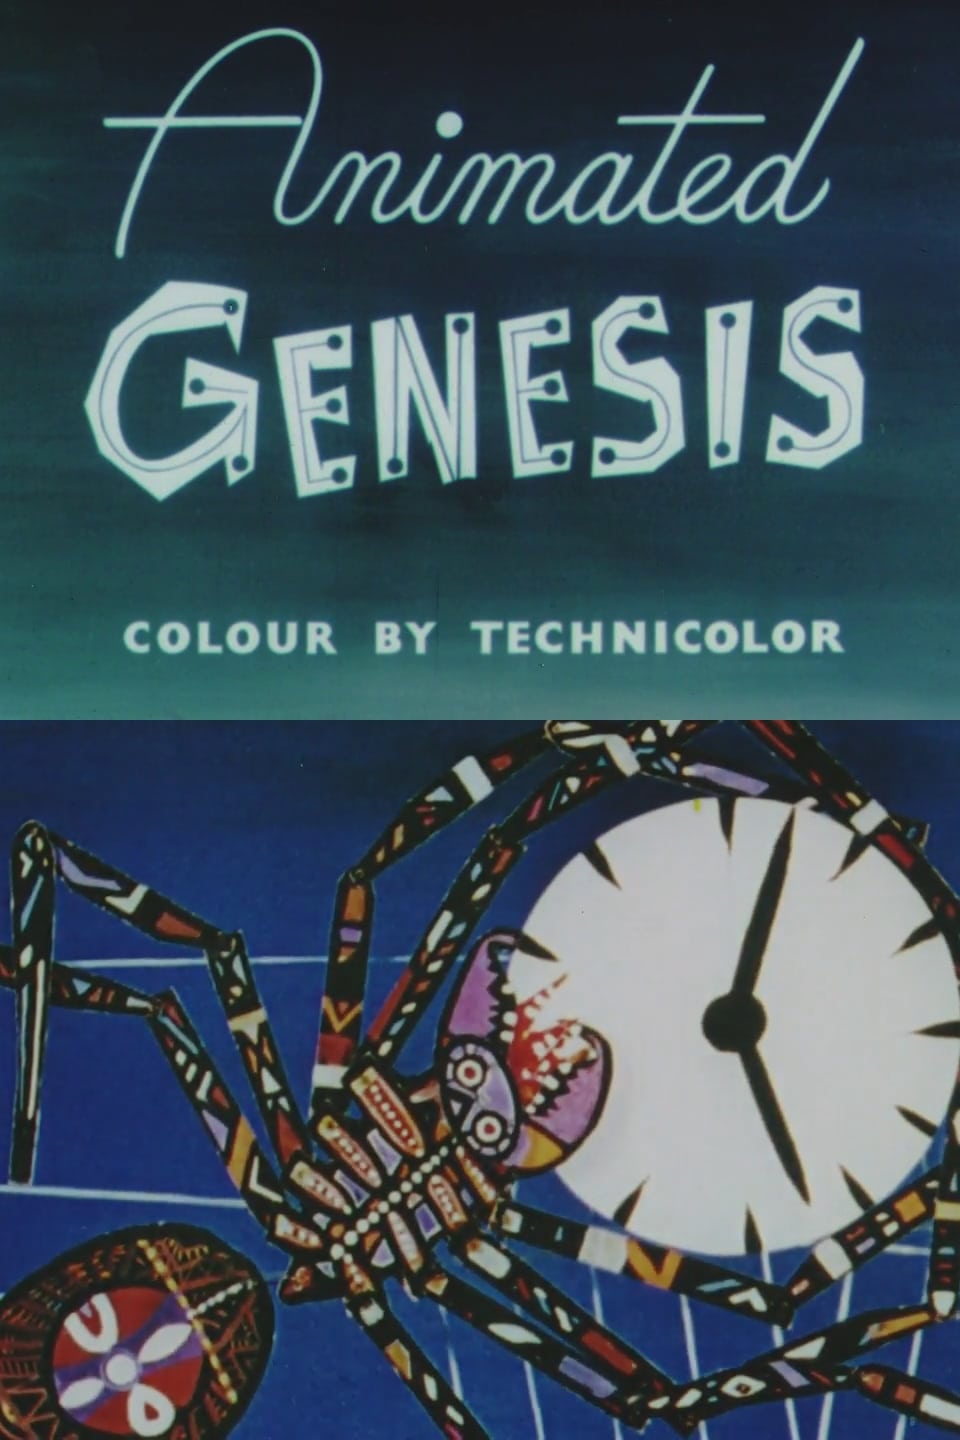 Animated Genesis